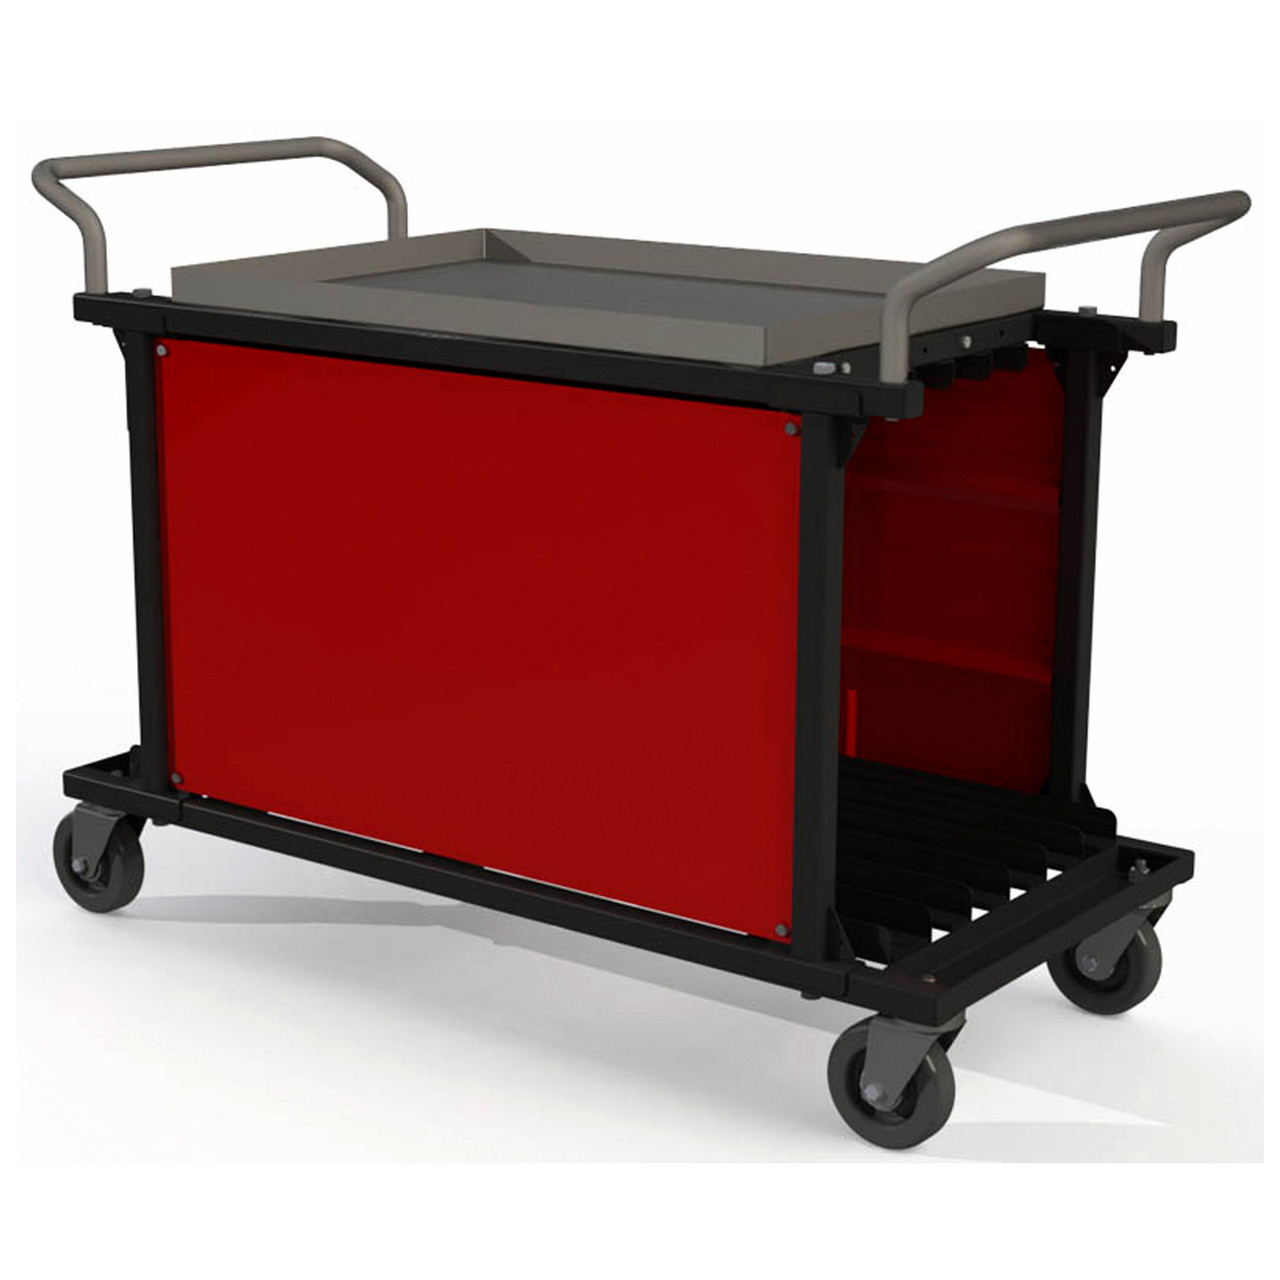 CS-650-C - Storage Cart for CS-650 Portable Alignment Kit from QSP | McBay Performance